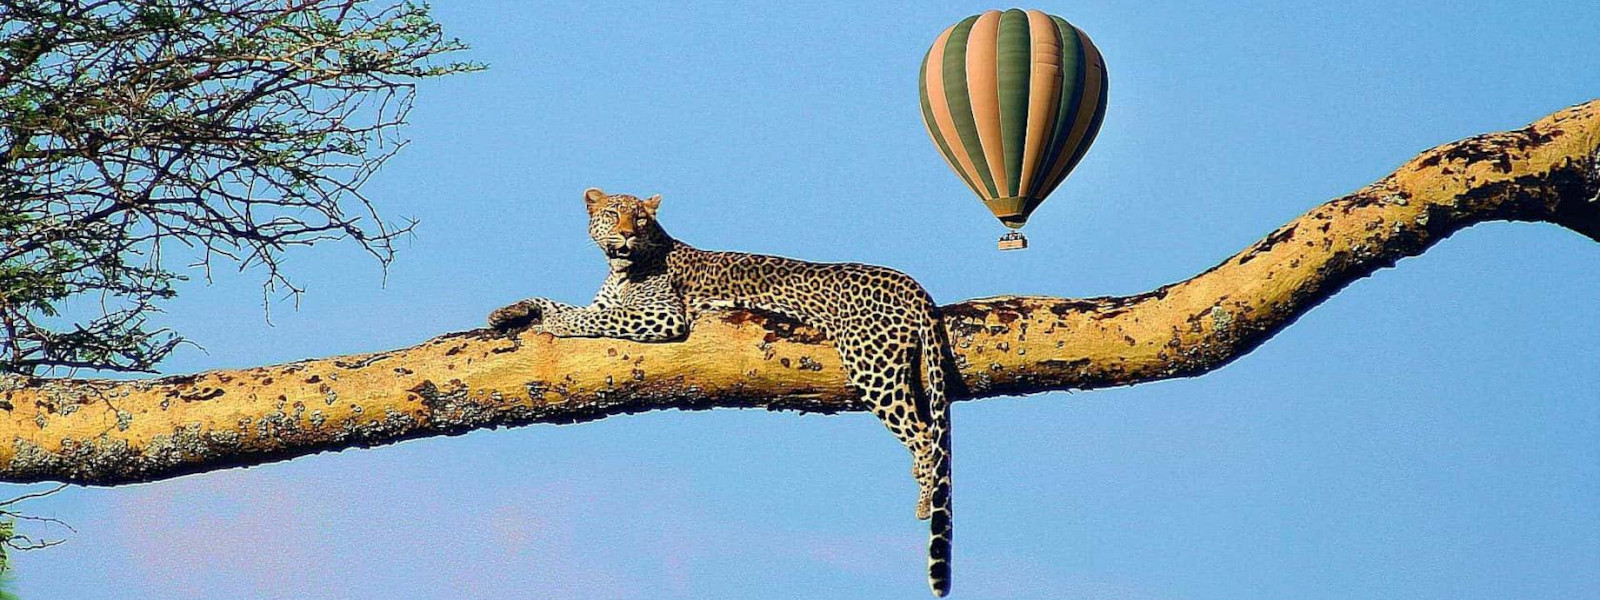 Flying High Above The Serengeti